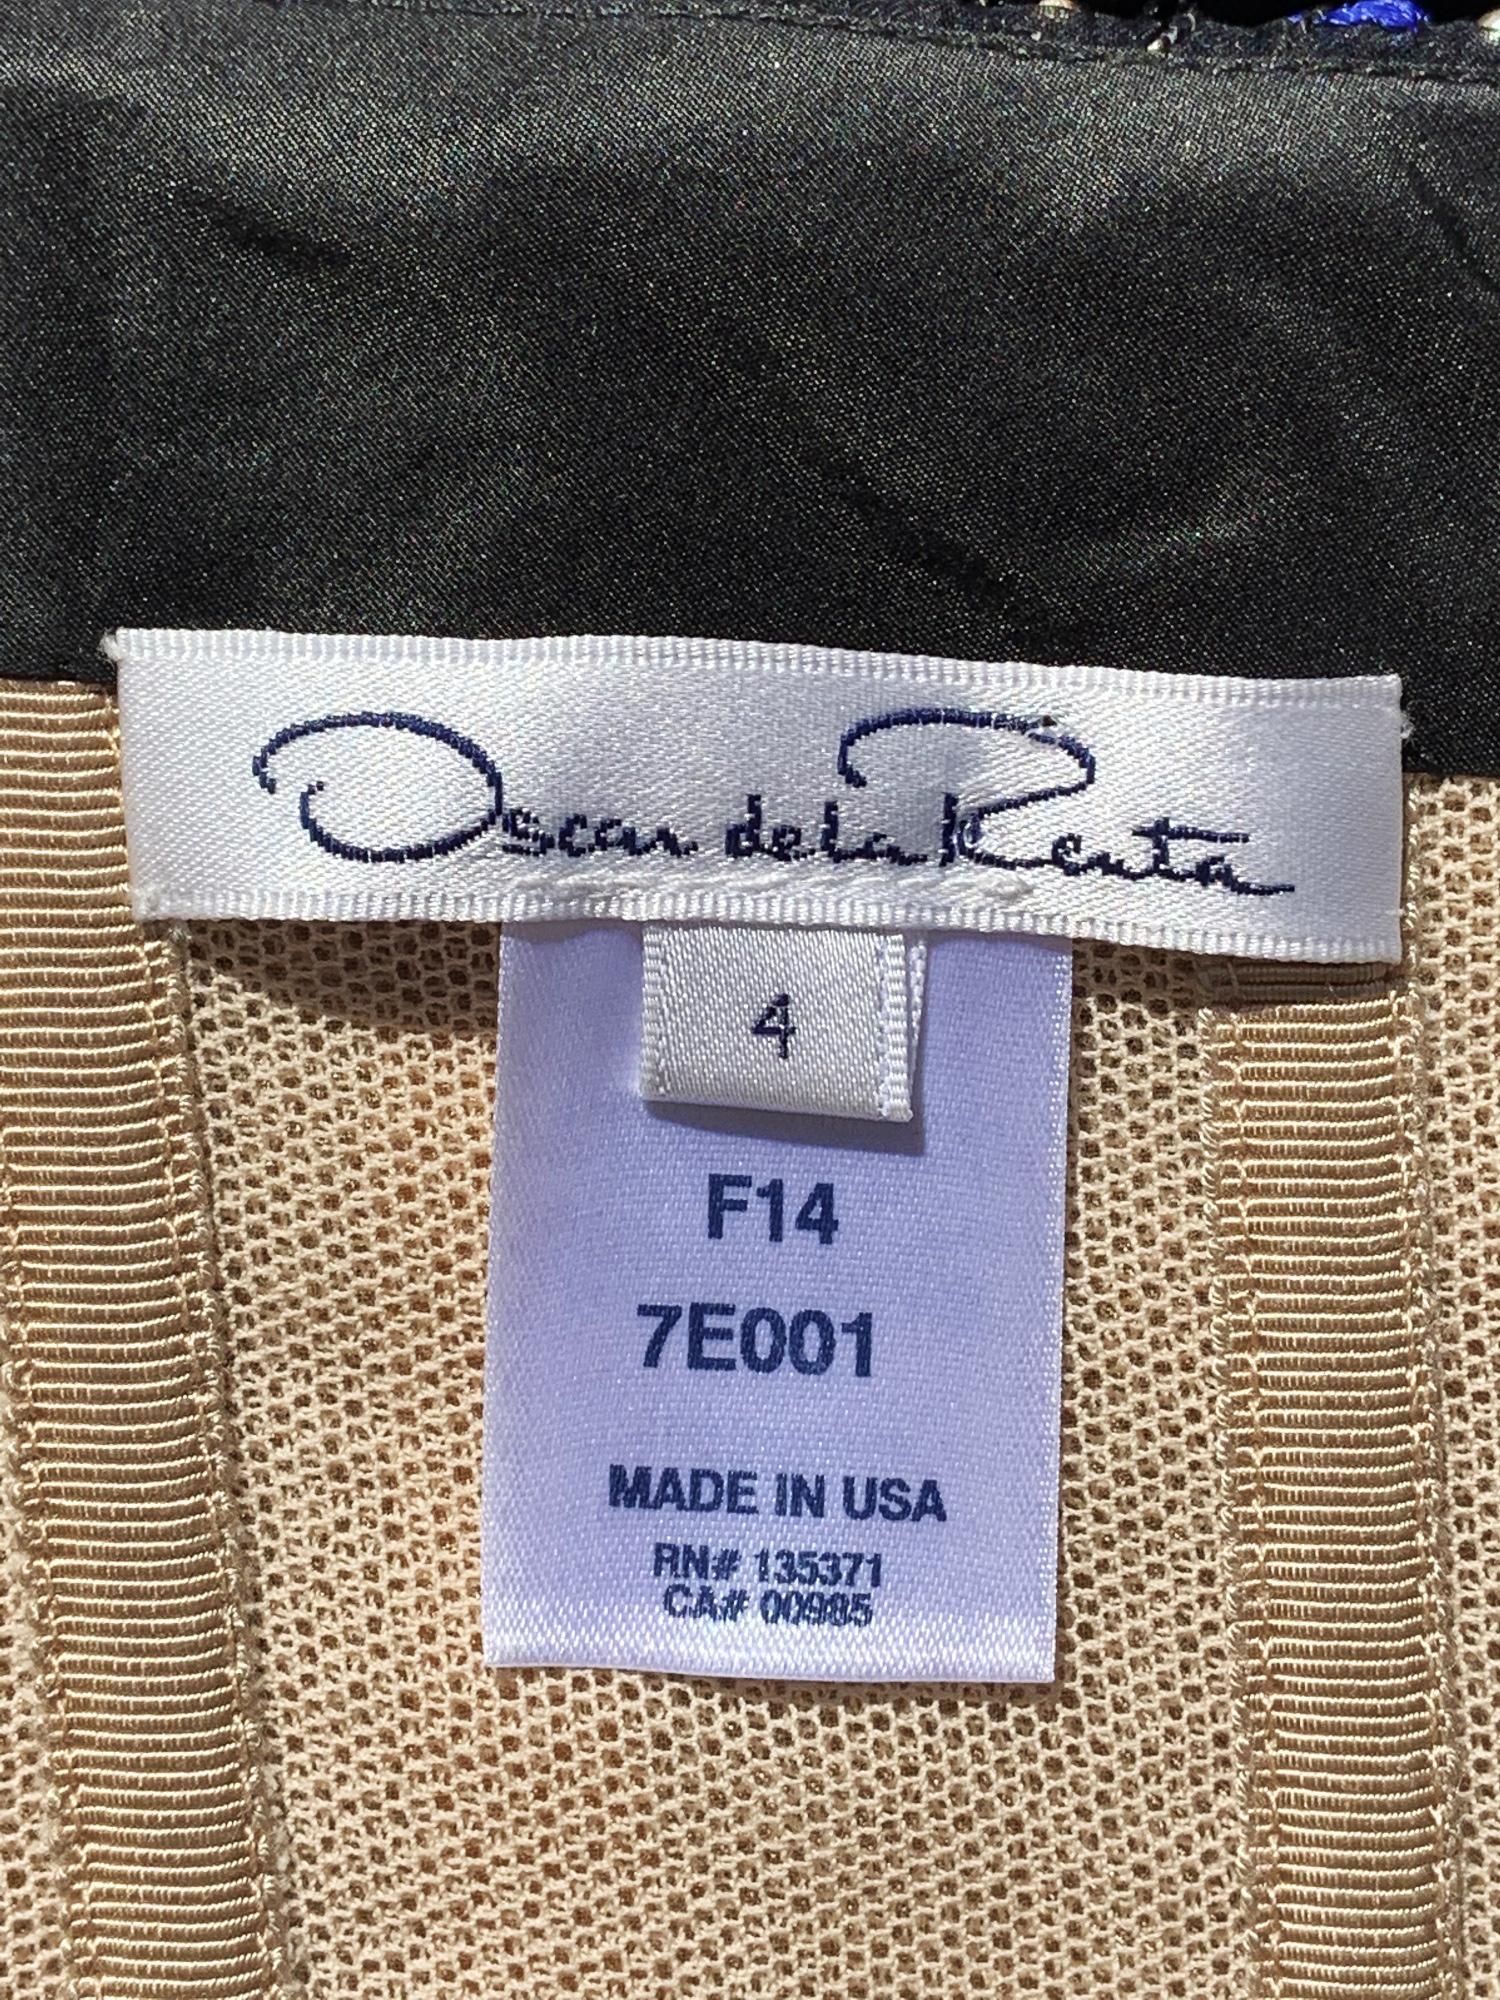 Oscar De La Renta F/W 2014 Blue Black Embroidered Beaded Corset Dress Gown US 4 For Sale 6